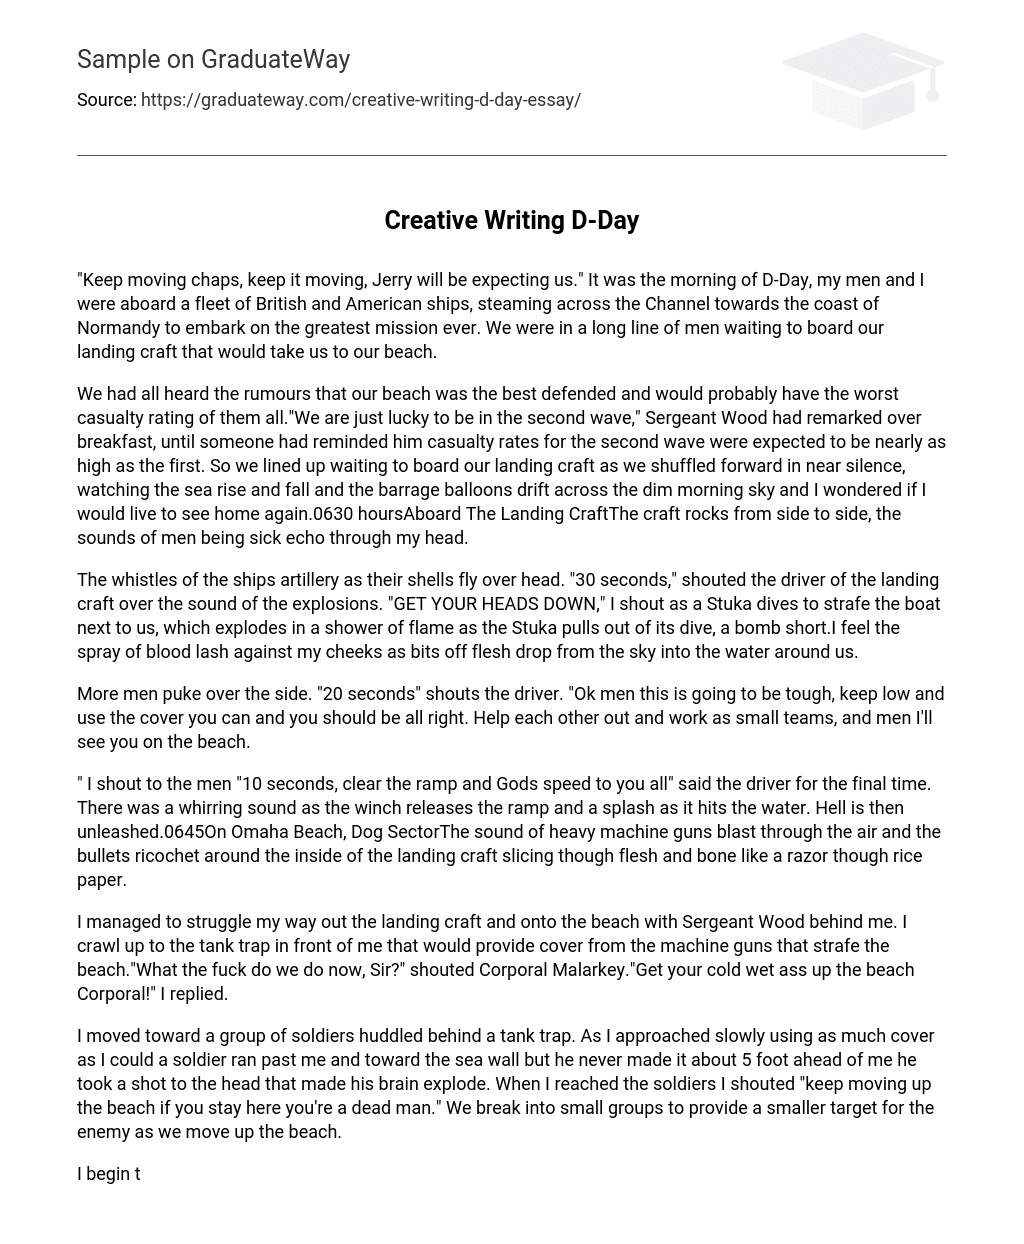 Creative Writing D-Day